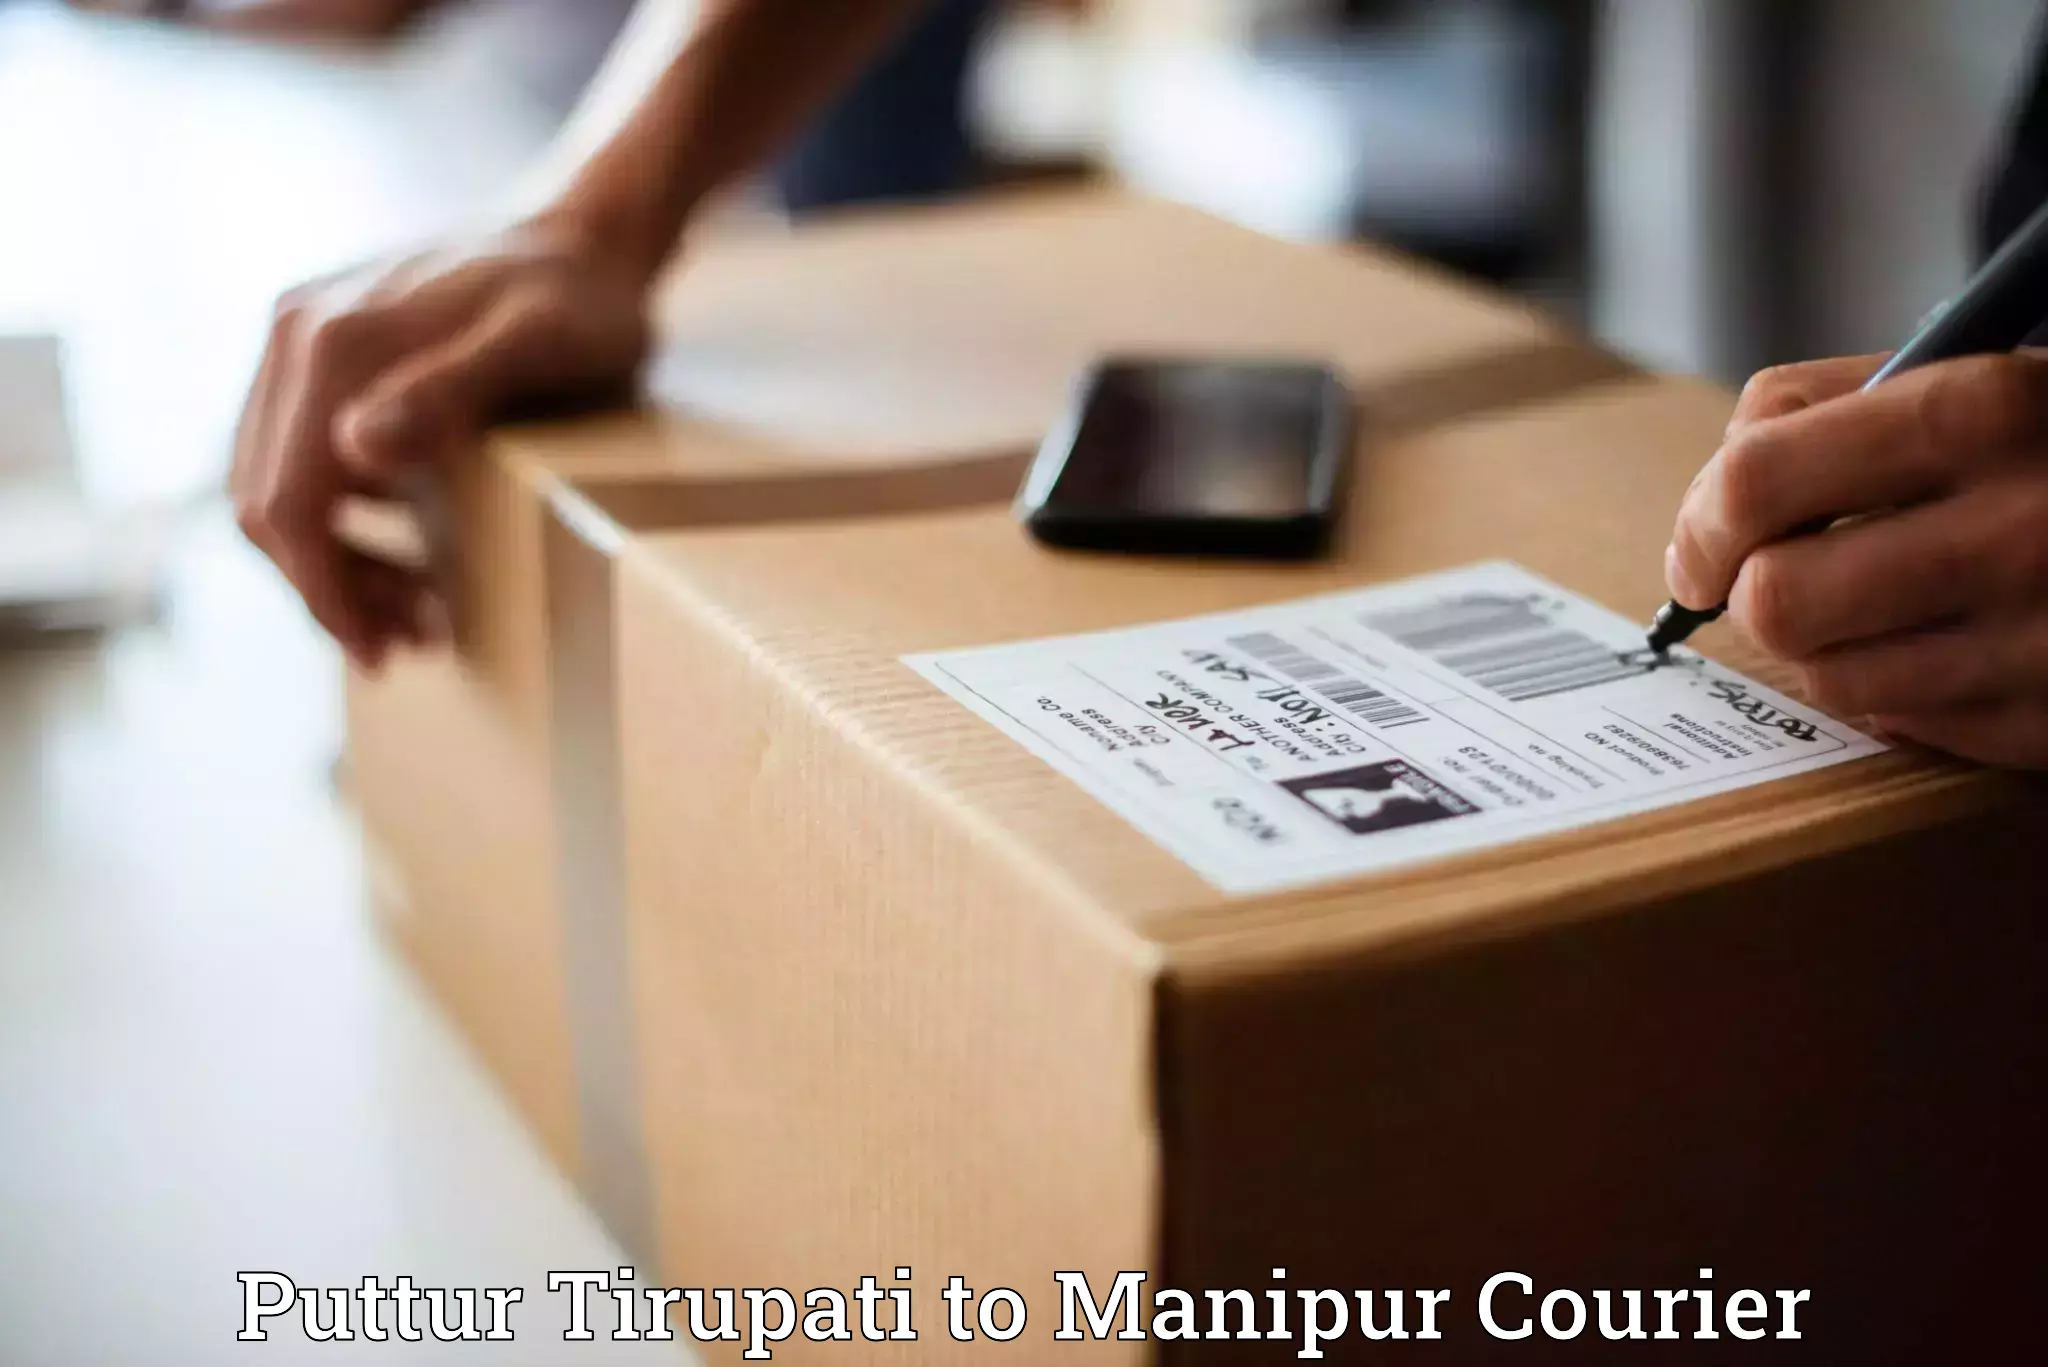 Business delivery service Puttur Tirupati to Manipur